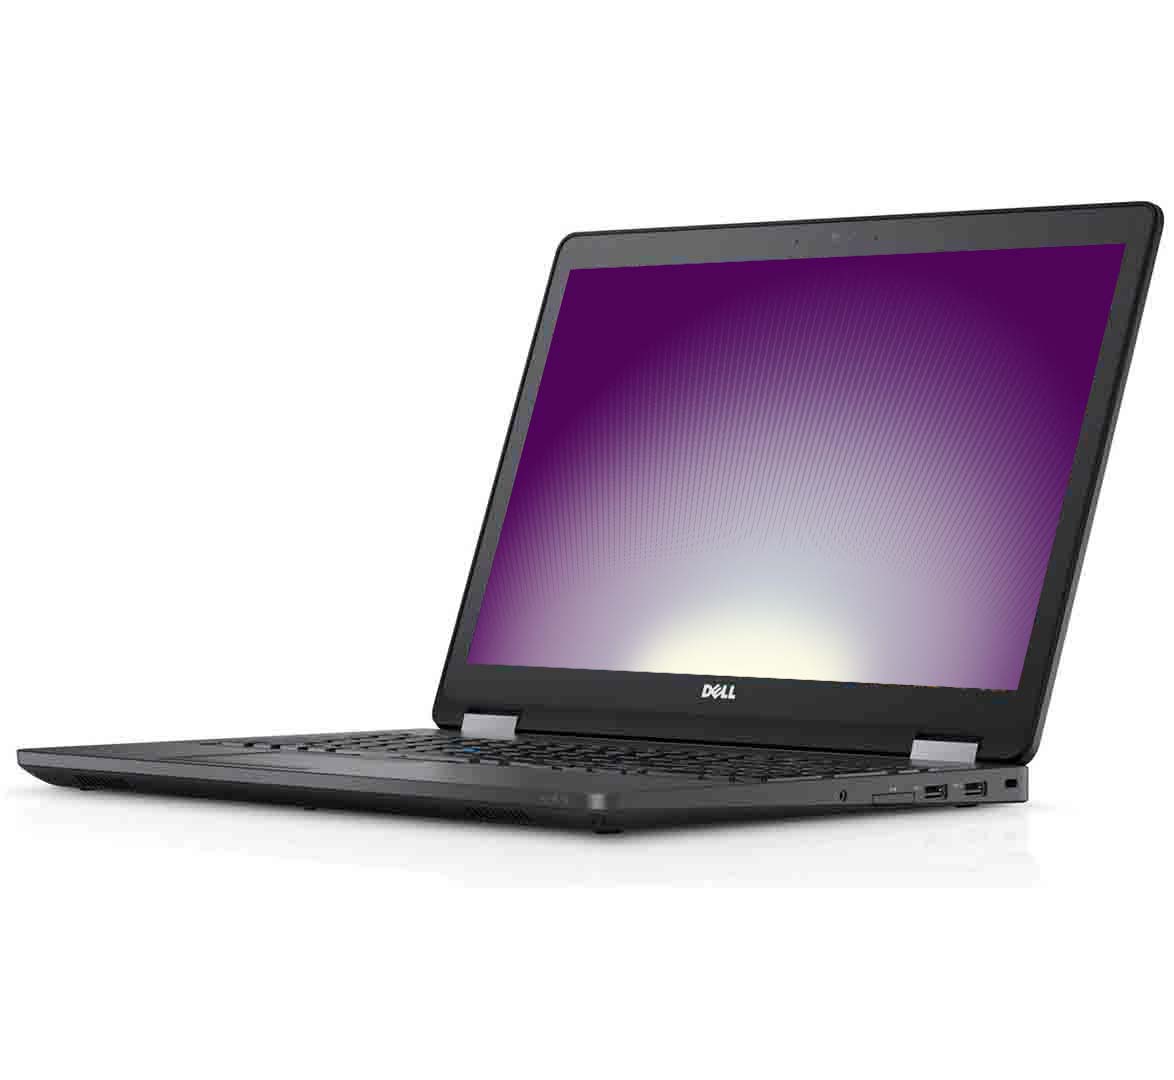 Dell Latitude 5580 Business Laptop, Intel Core i7-7th Generation CPU, 8GB RAM, 256GB SSD, 15.6 inch Display, Windows 10 Pro, Refurbished Laptop